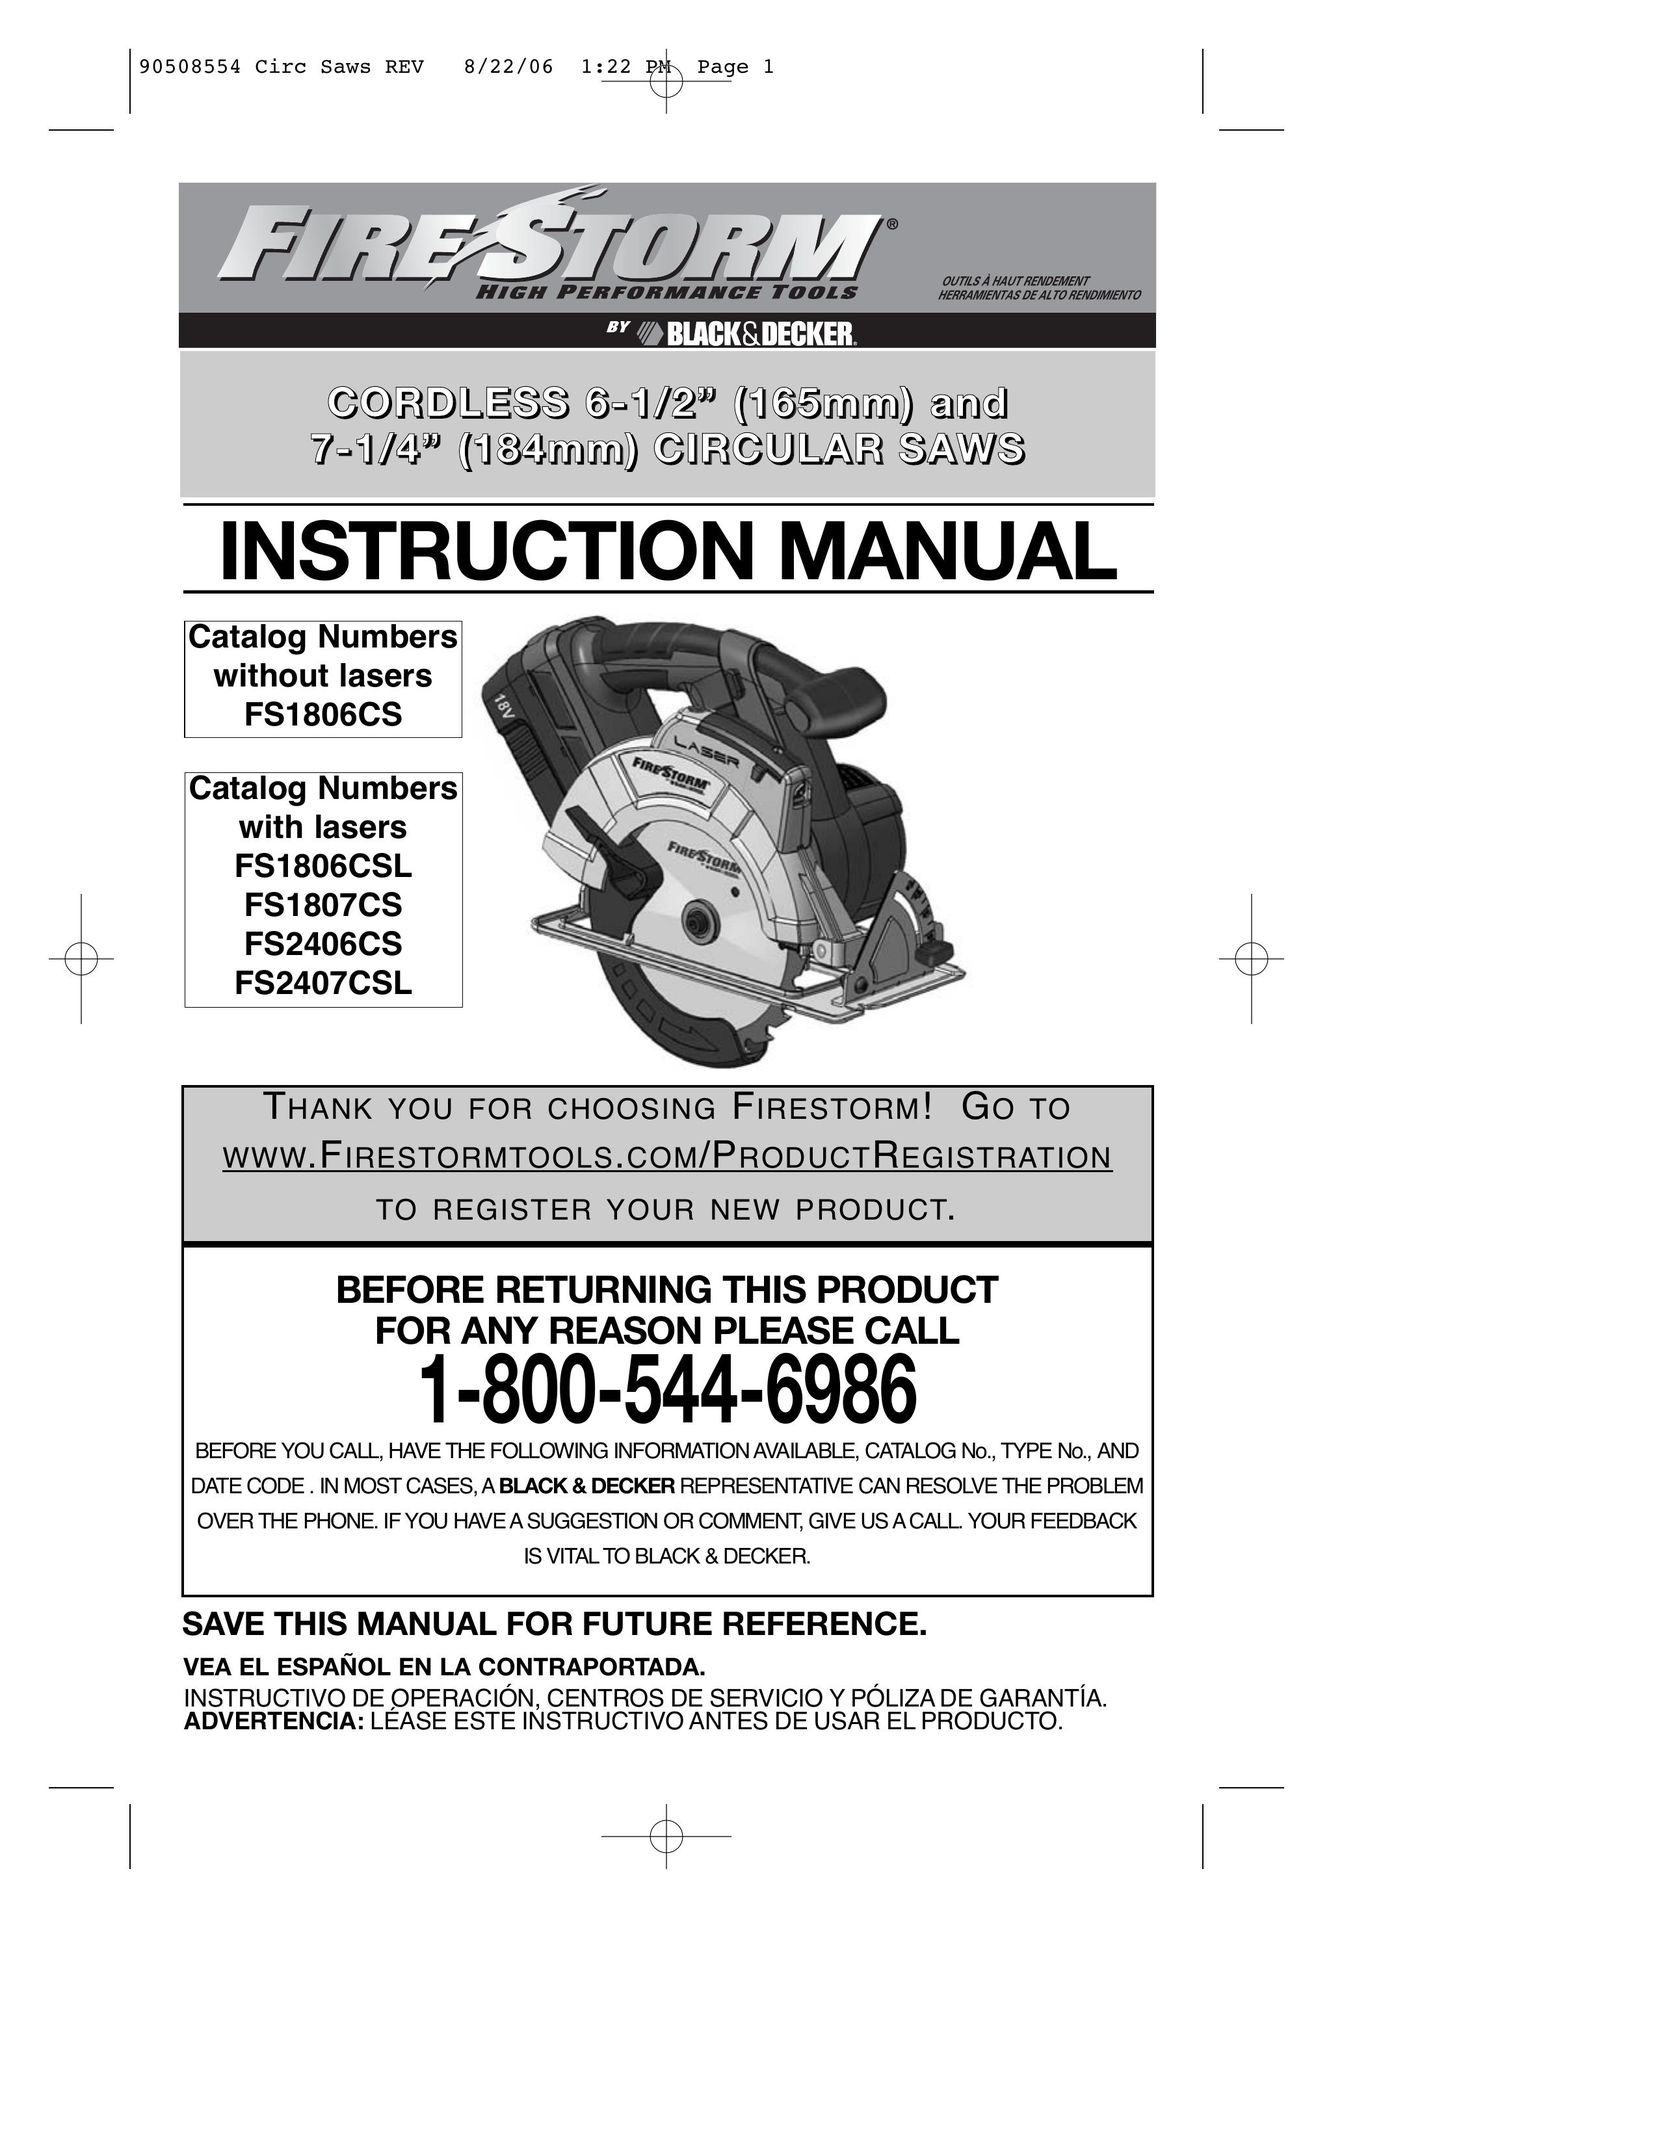 Black & Decker FS2407CSL Cordless Saw User Manual